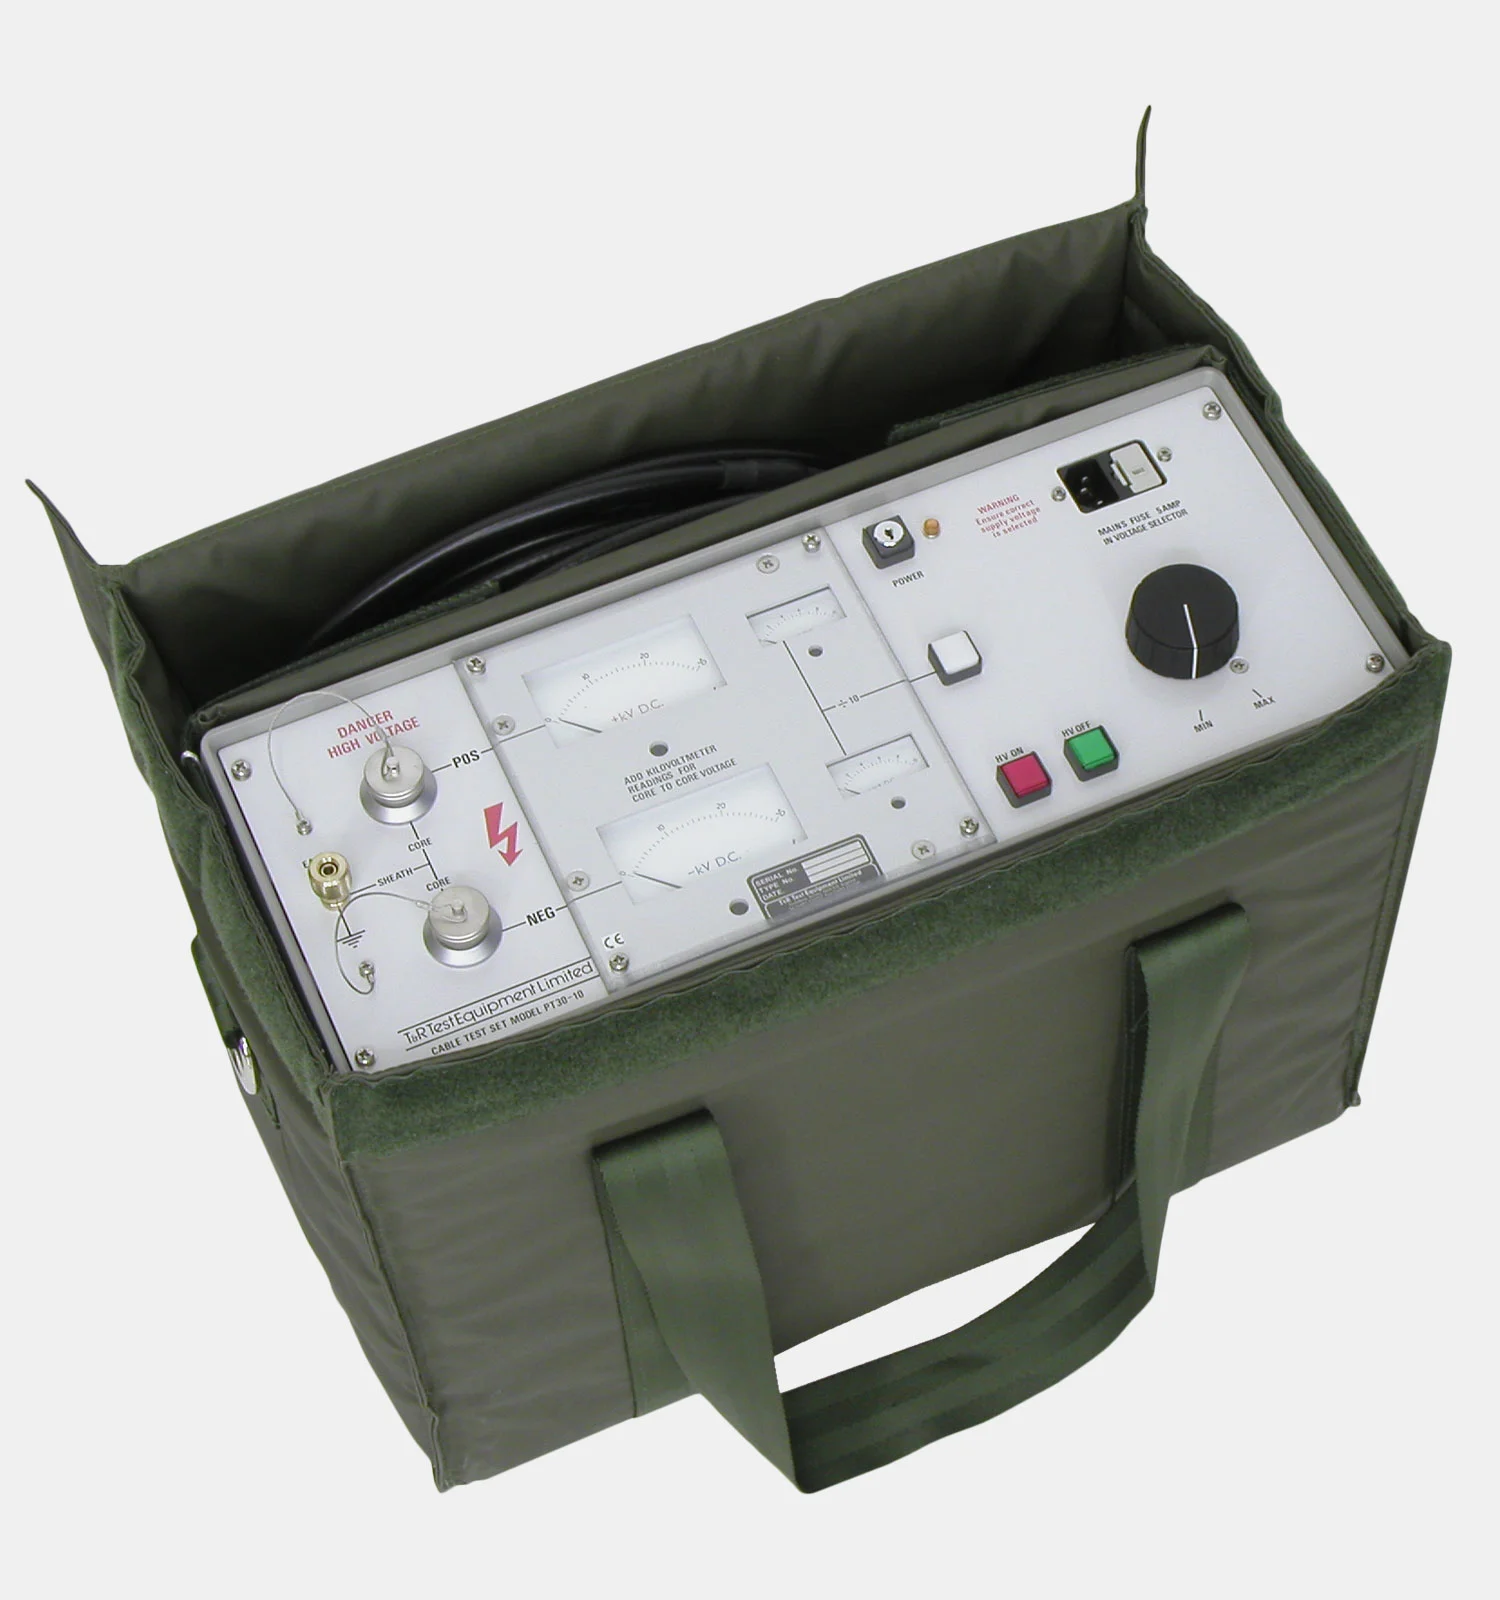 Suppliers of PT30-10 MK3 Test Set